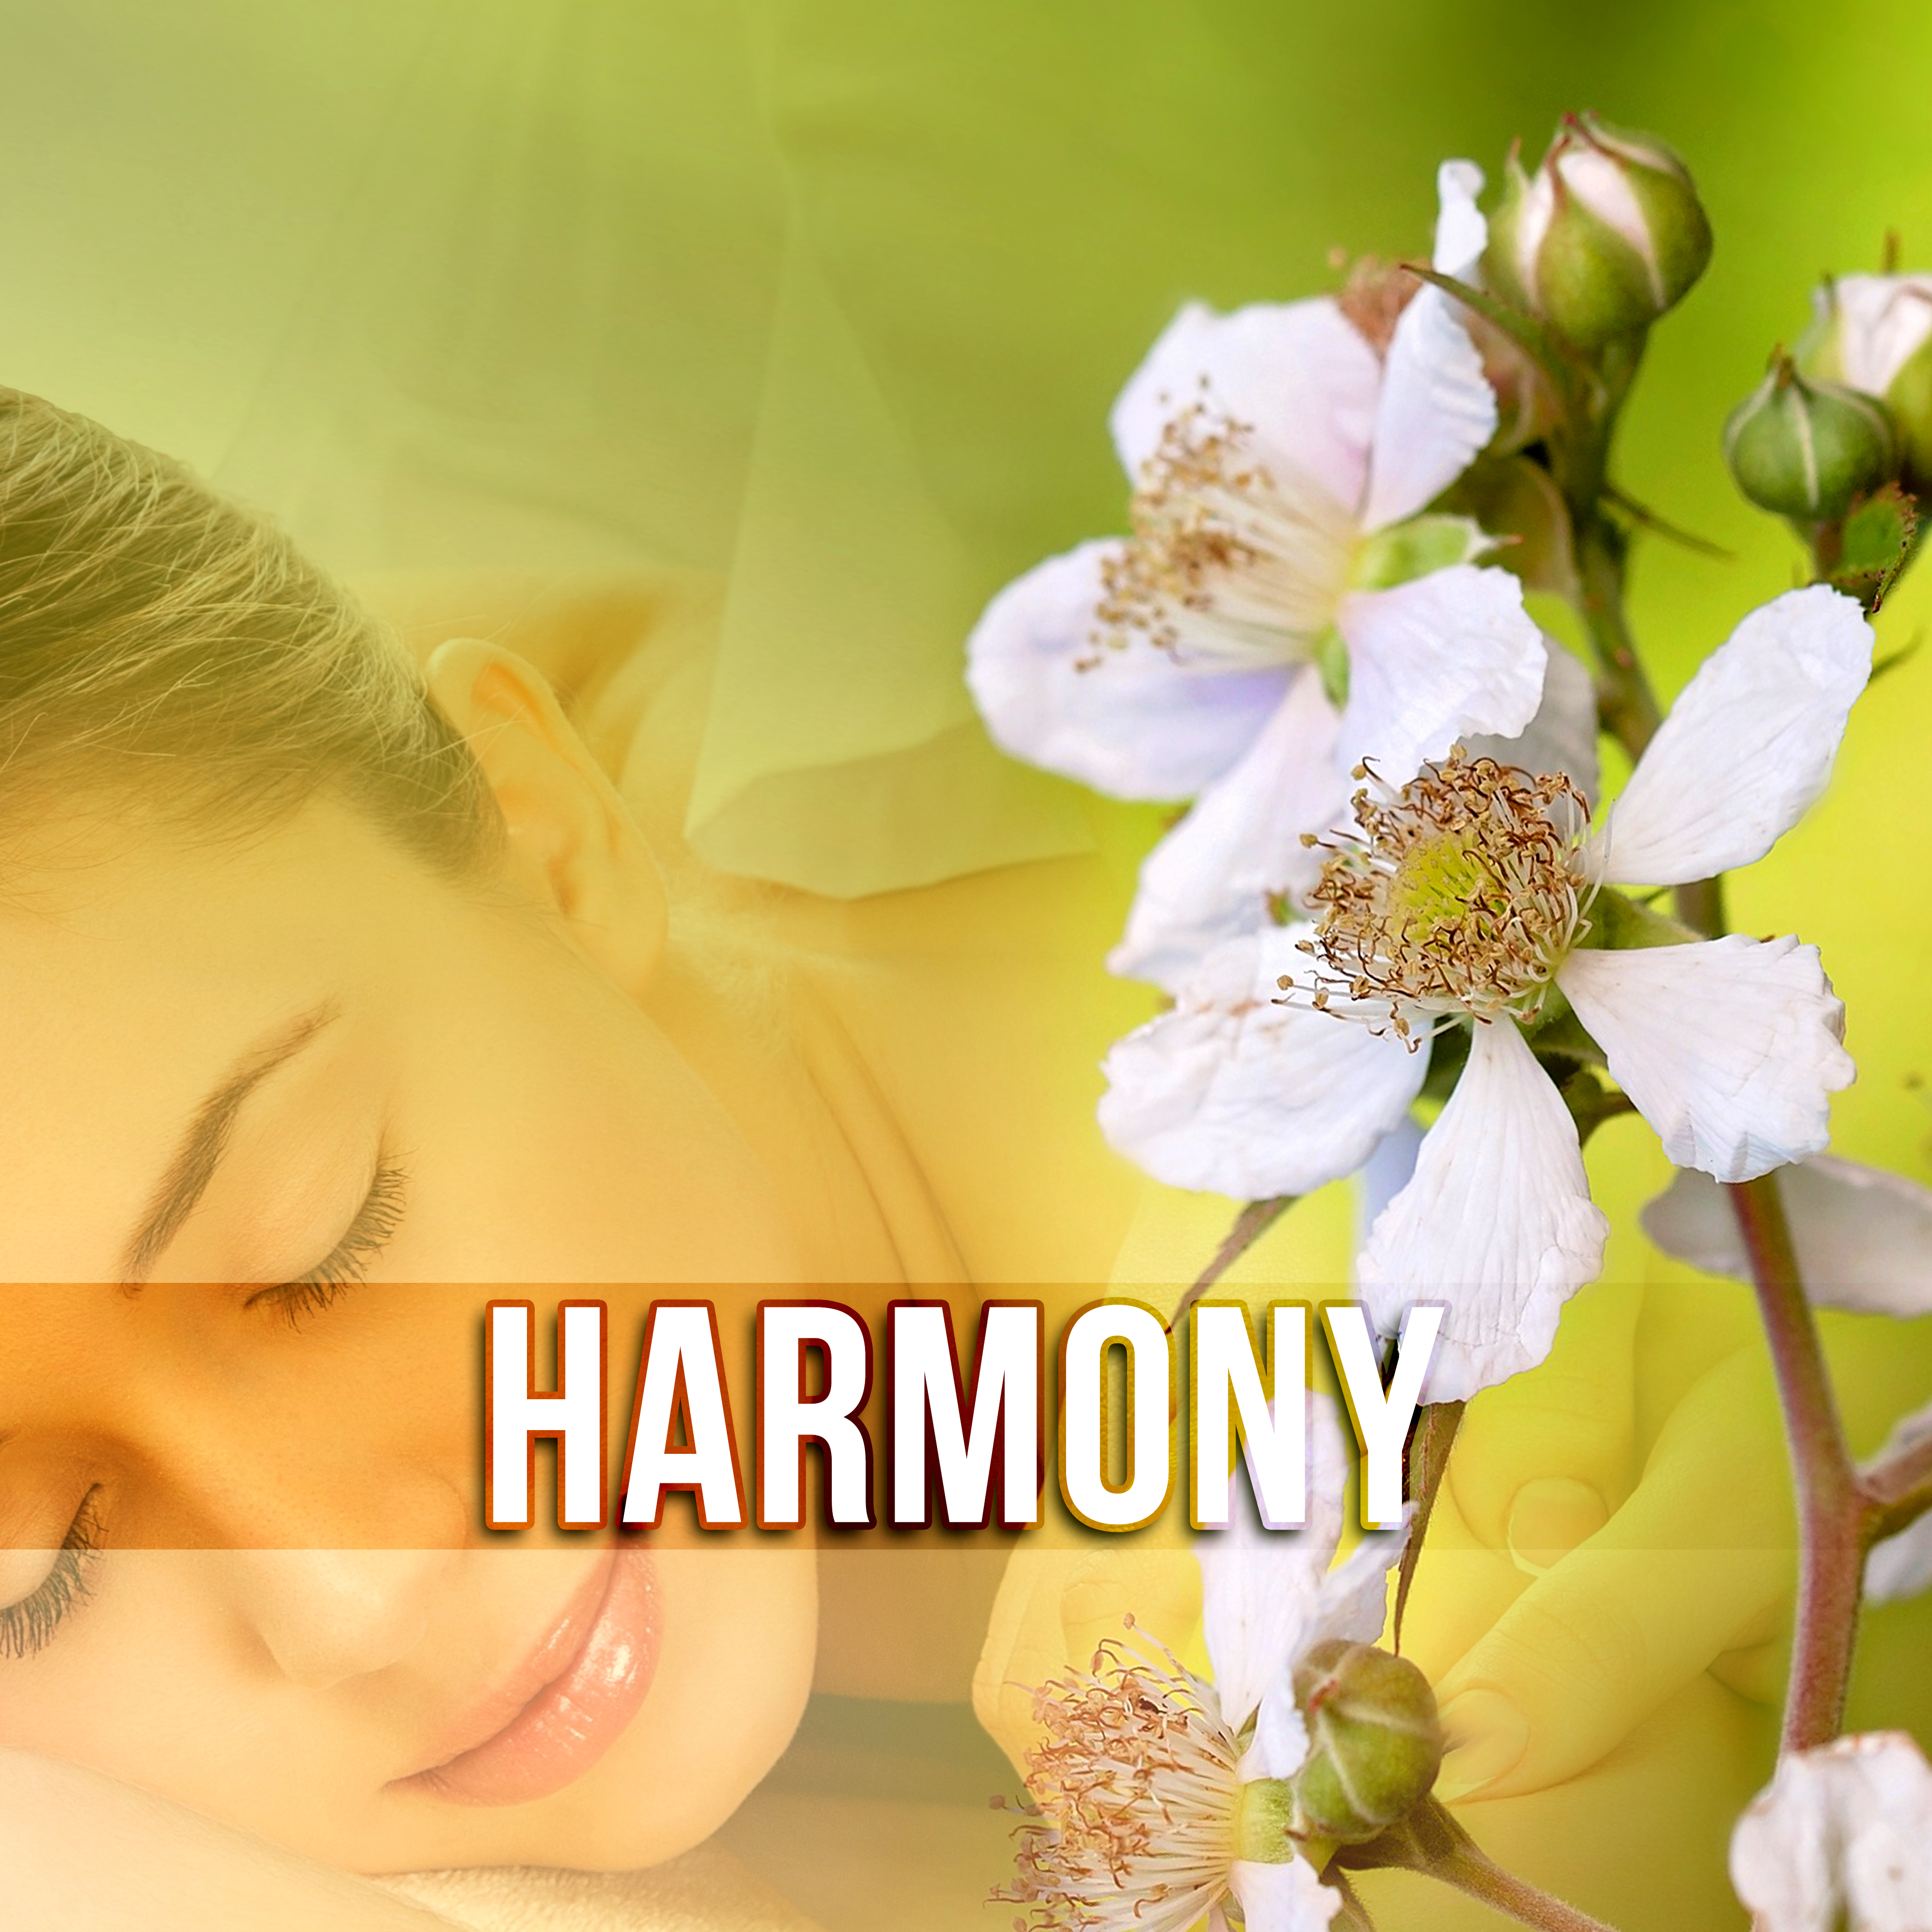 Harmony - Spa & Wellness, Reiki Healing, Yoga, Ayurveda, Calm Background Music for Oil Massage